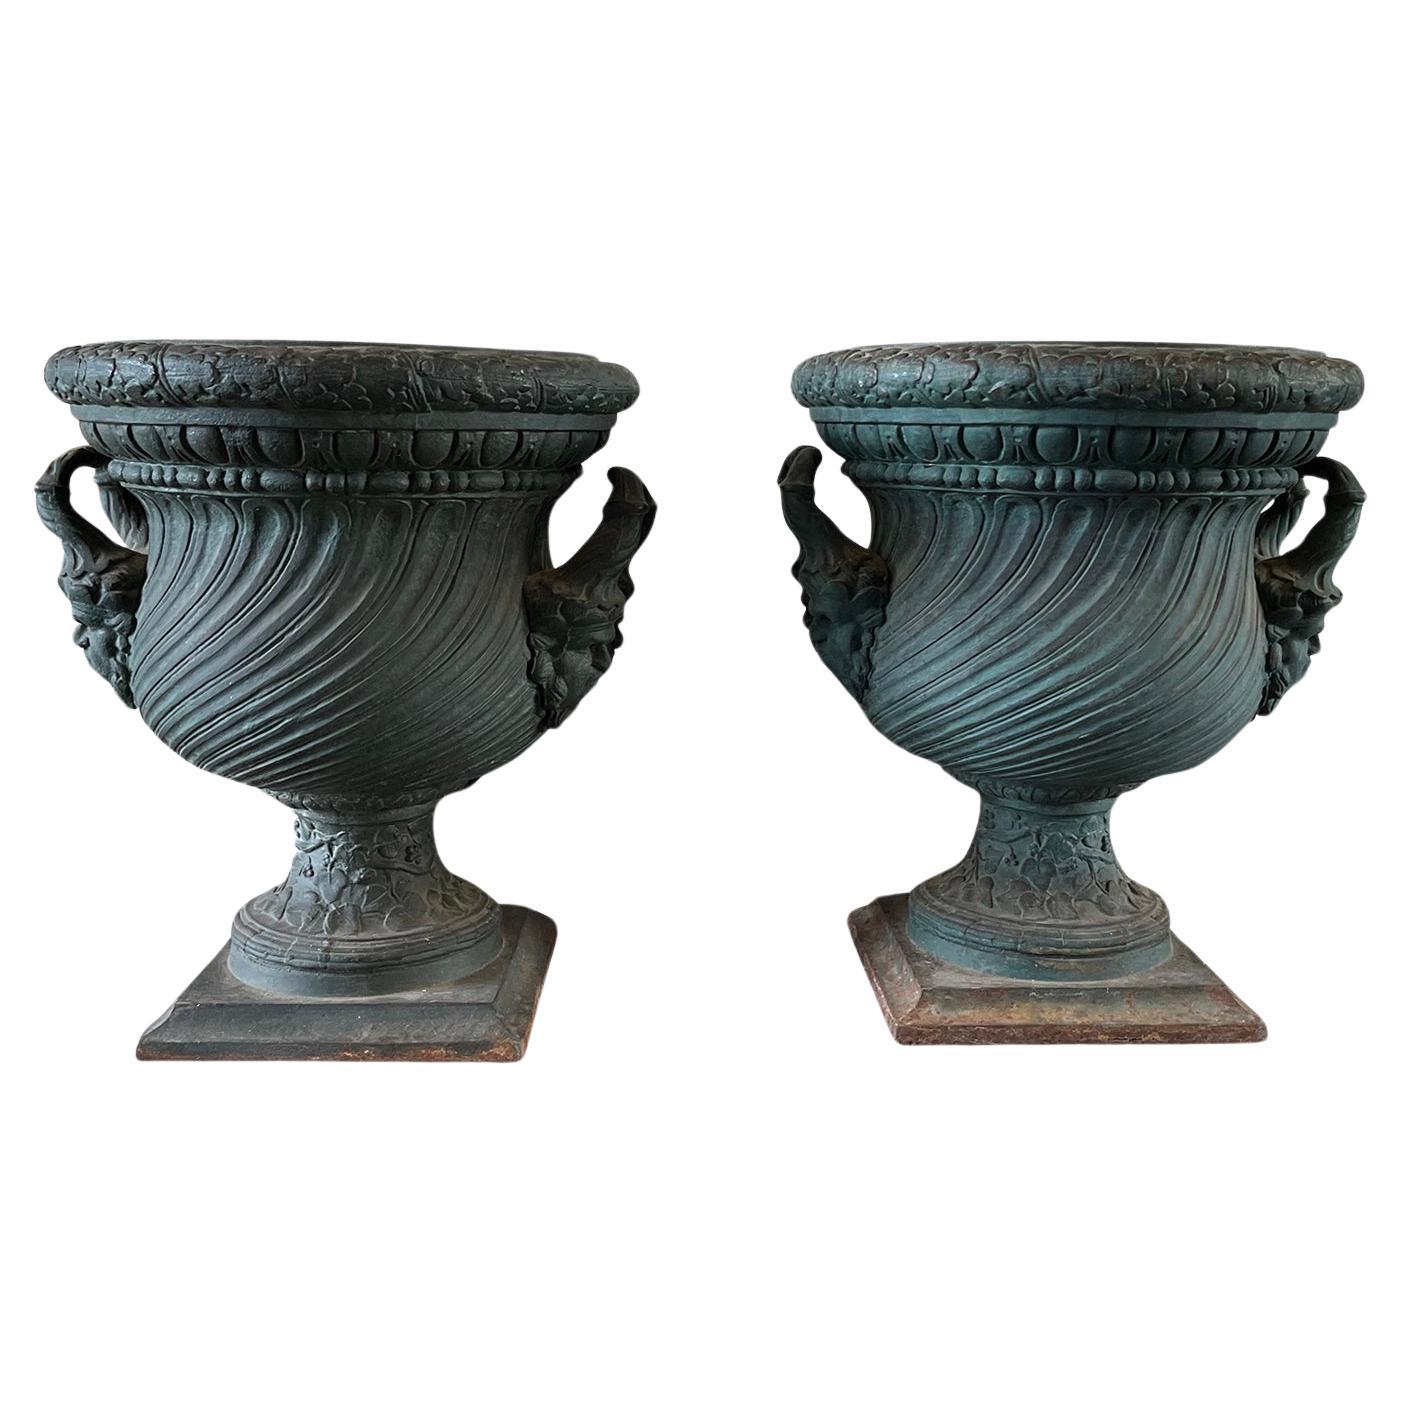 19th Century Pair of Ile de France Urns - Antique French Cast Iron Planters For Sale